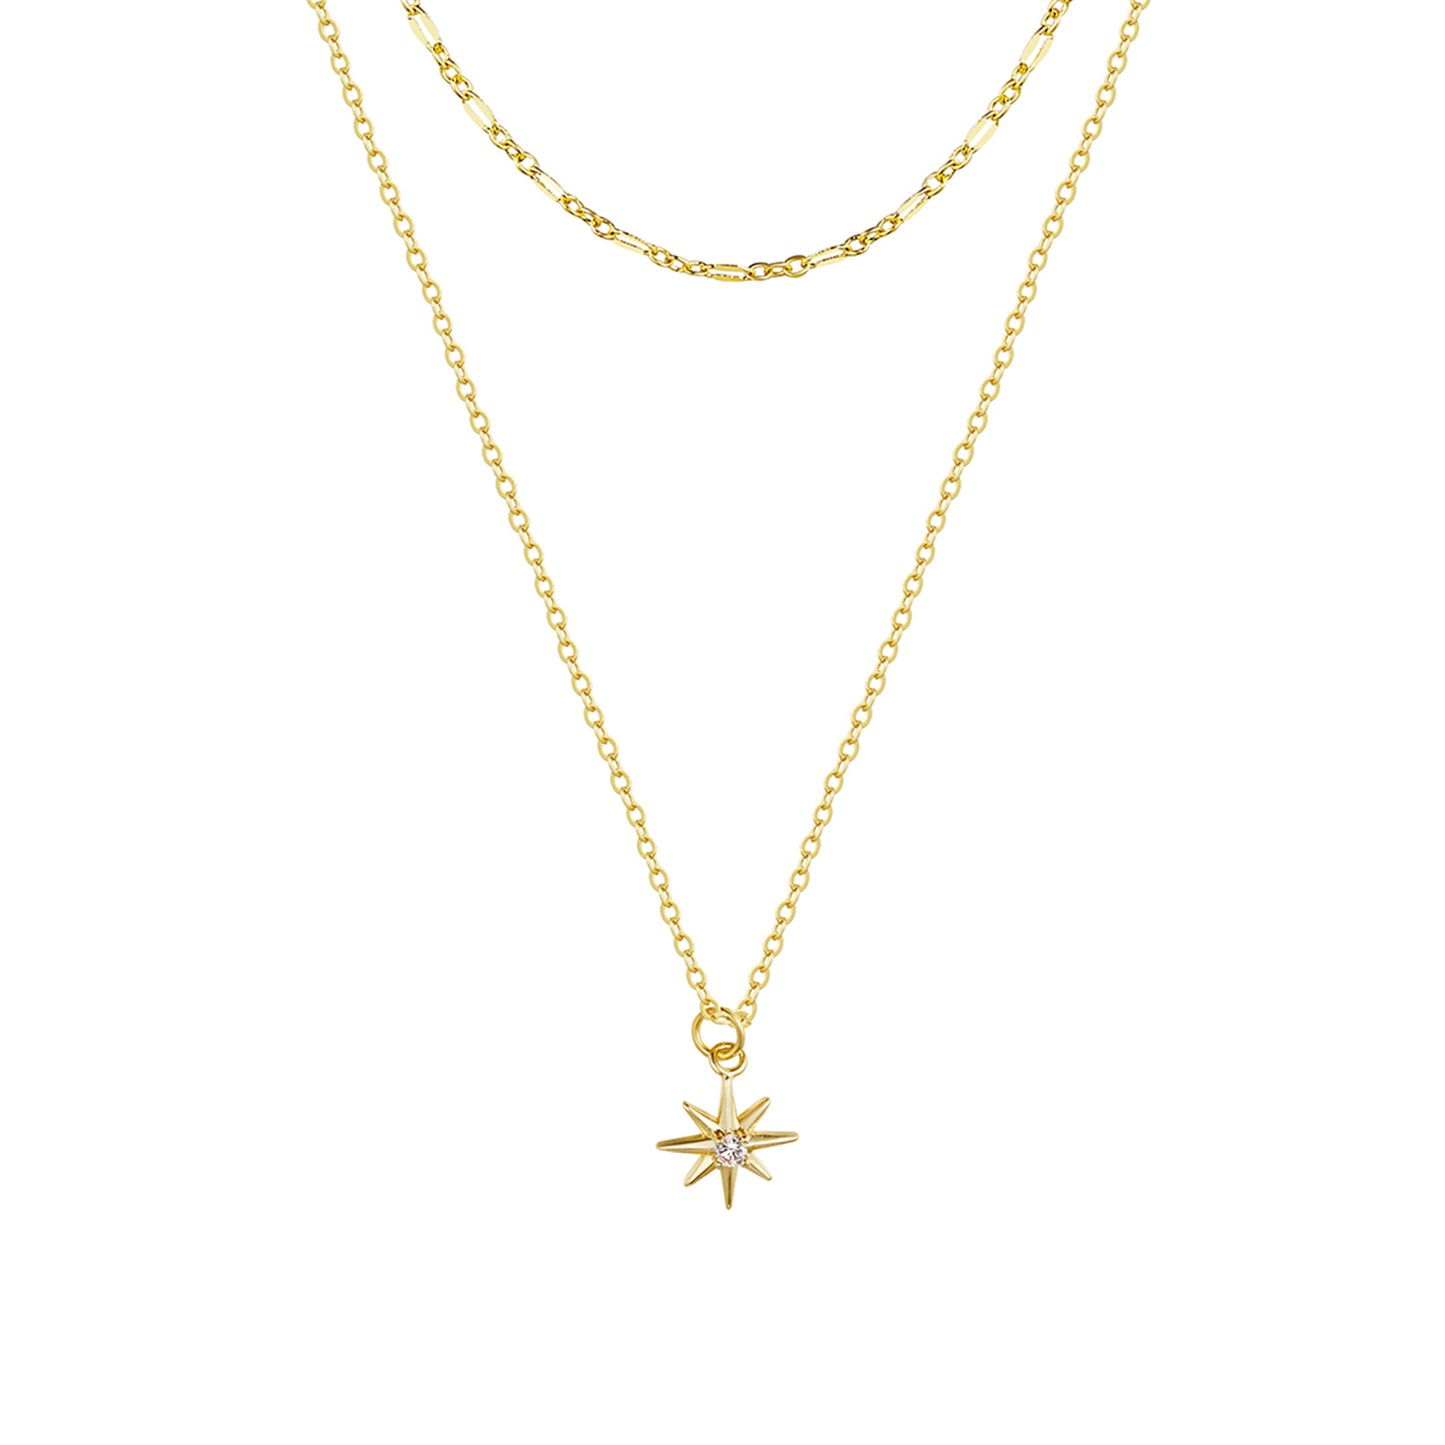 TASISO Dainty Double Lip Chain Celestial North Star Pendant Necklace